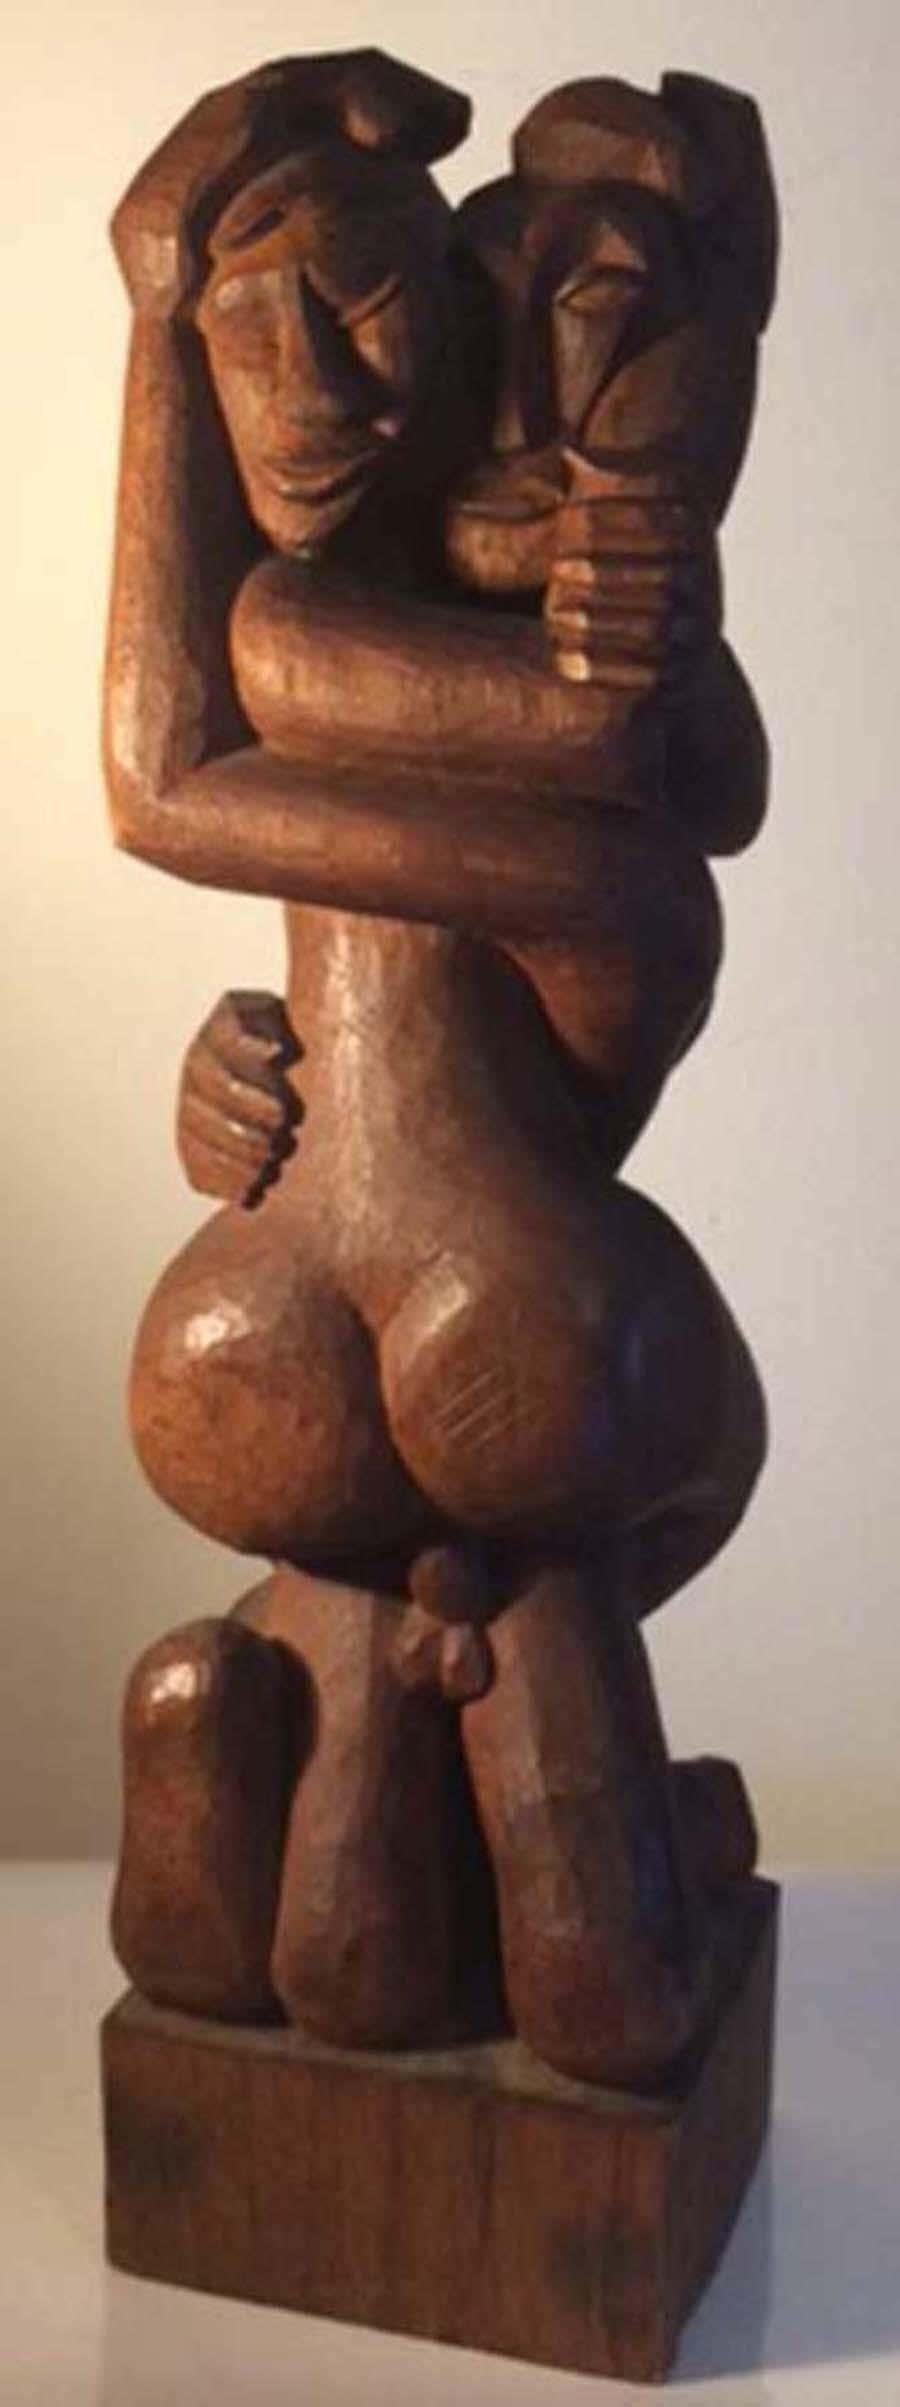 Osman "Ajax" - Jackson Erotica Sculpture